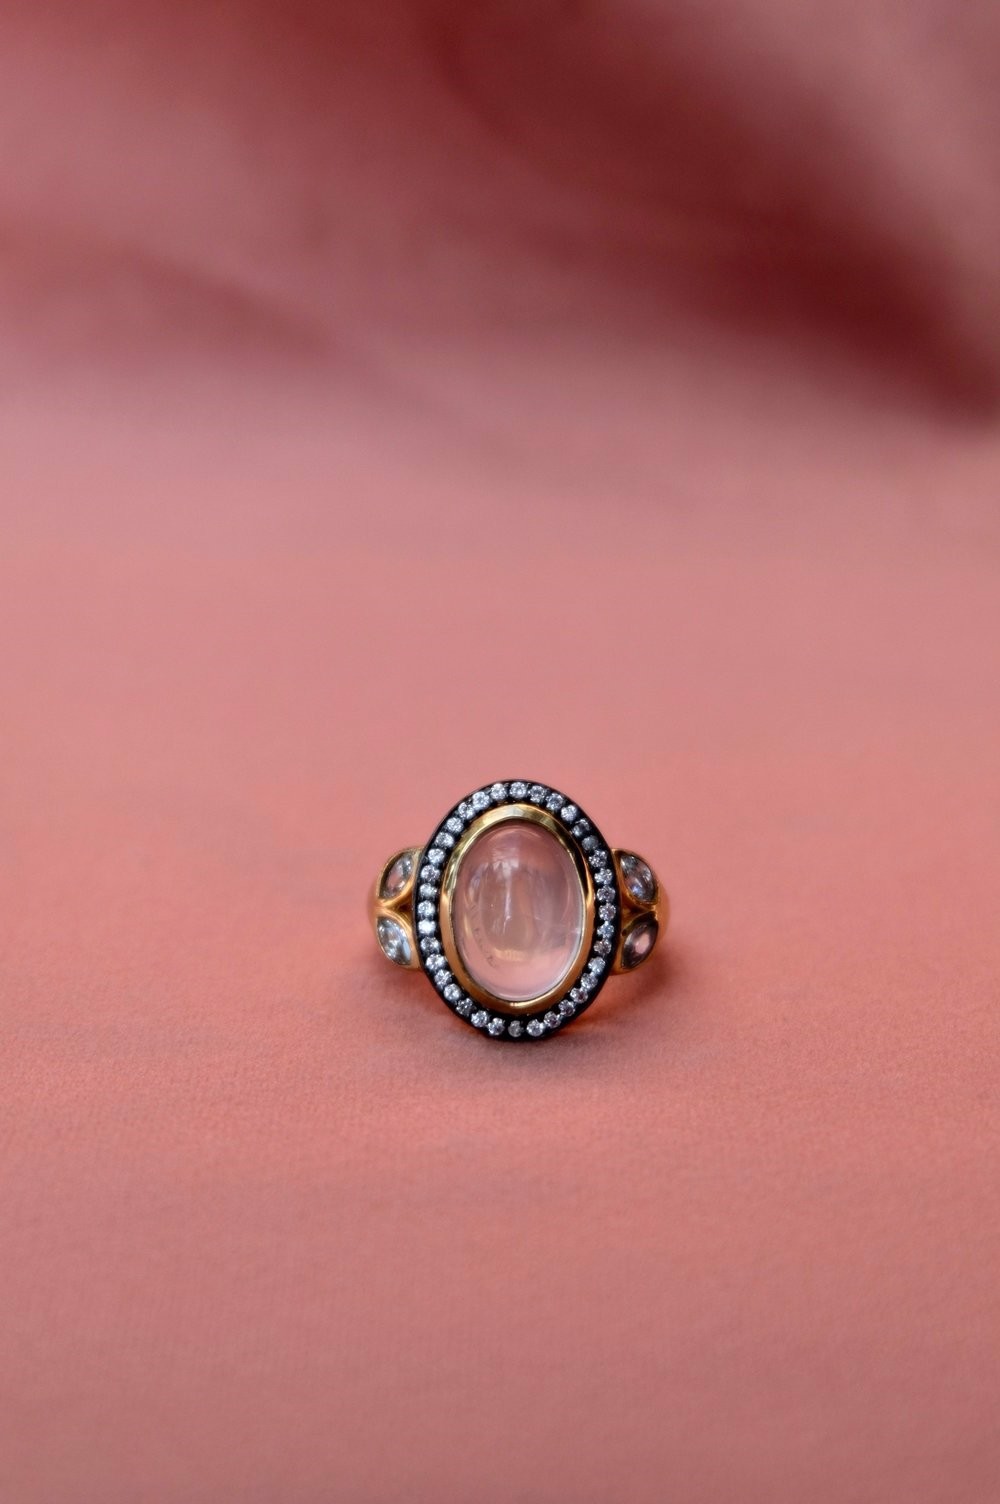 Joseph cph ring - Alba rose ring, Gold